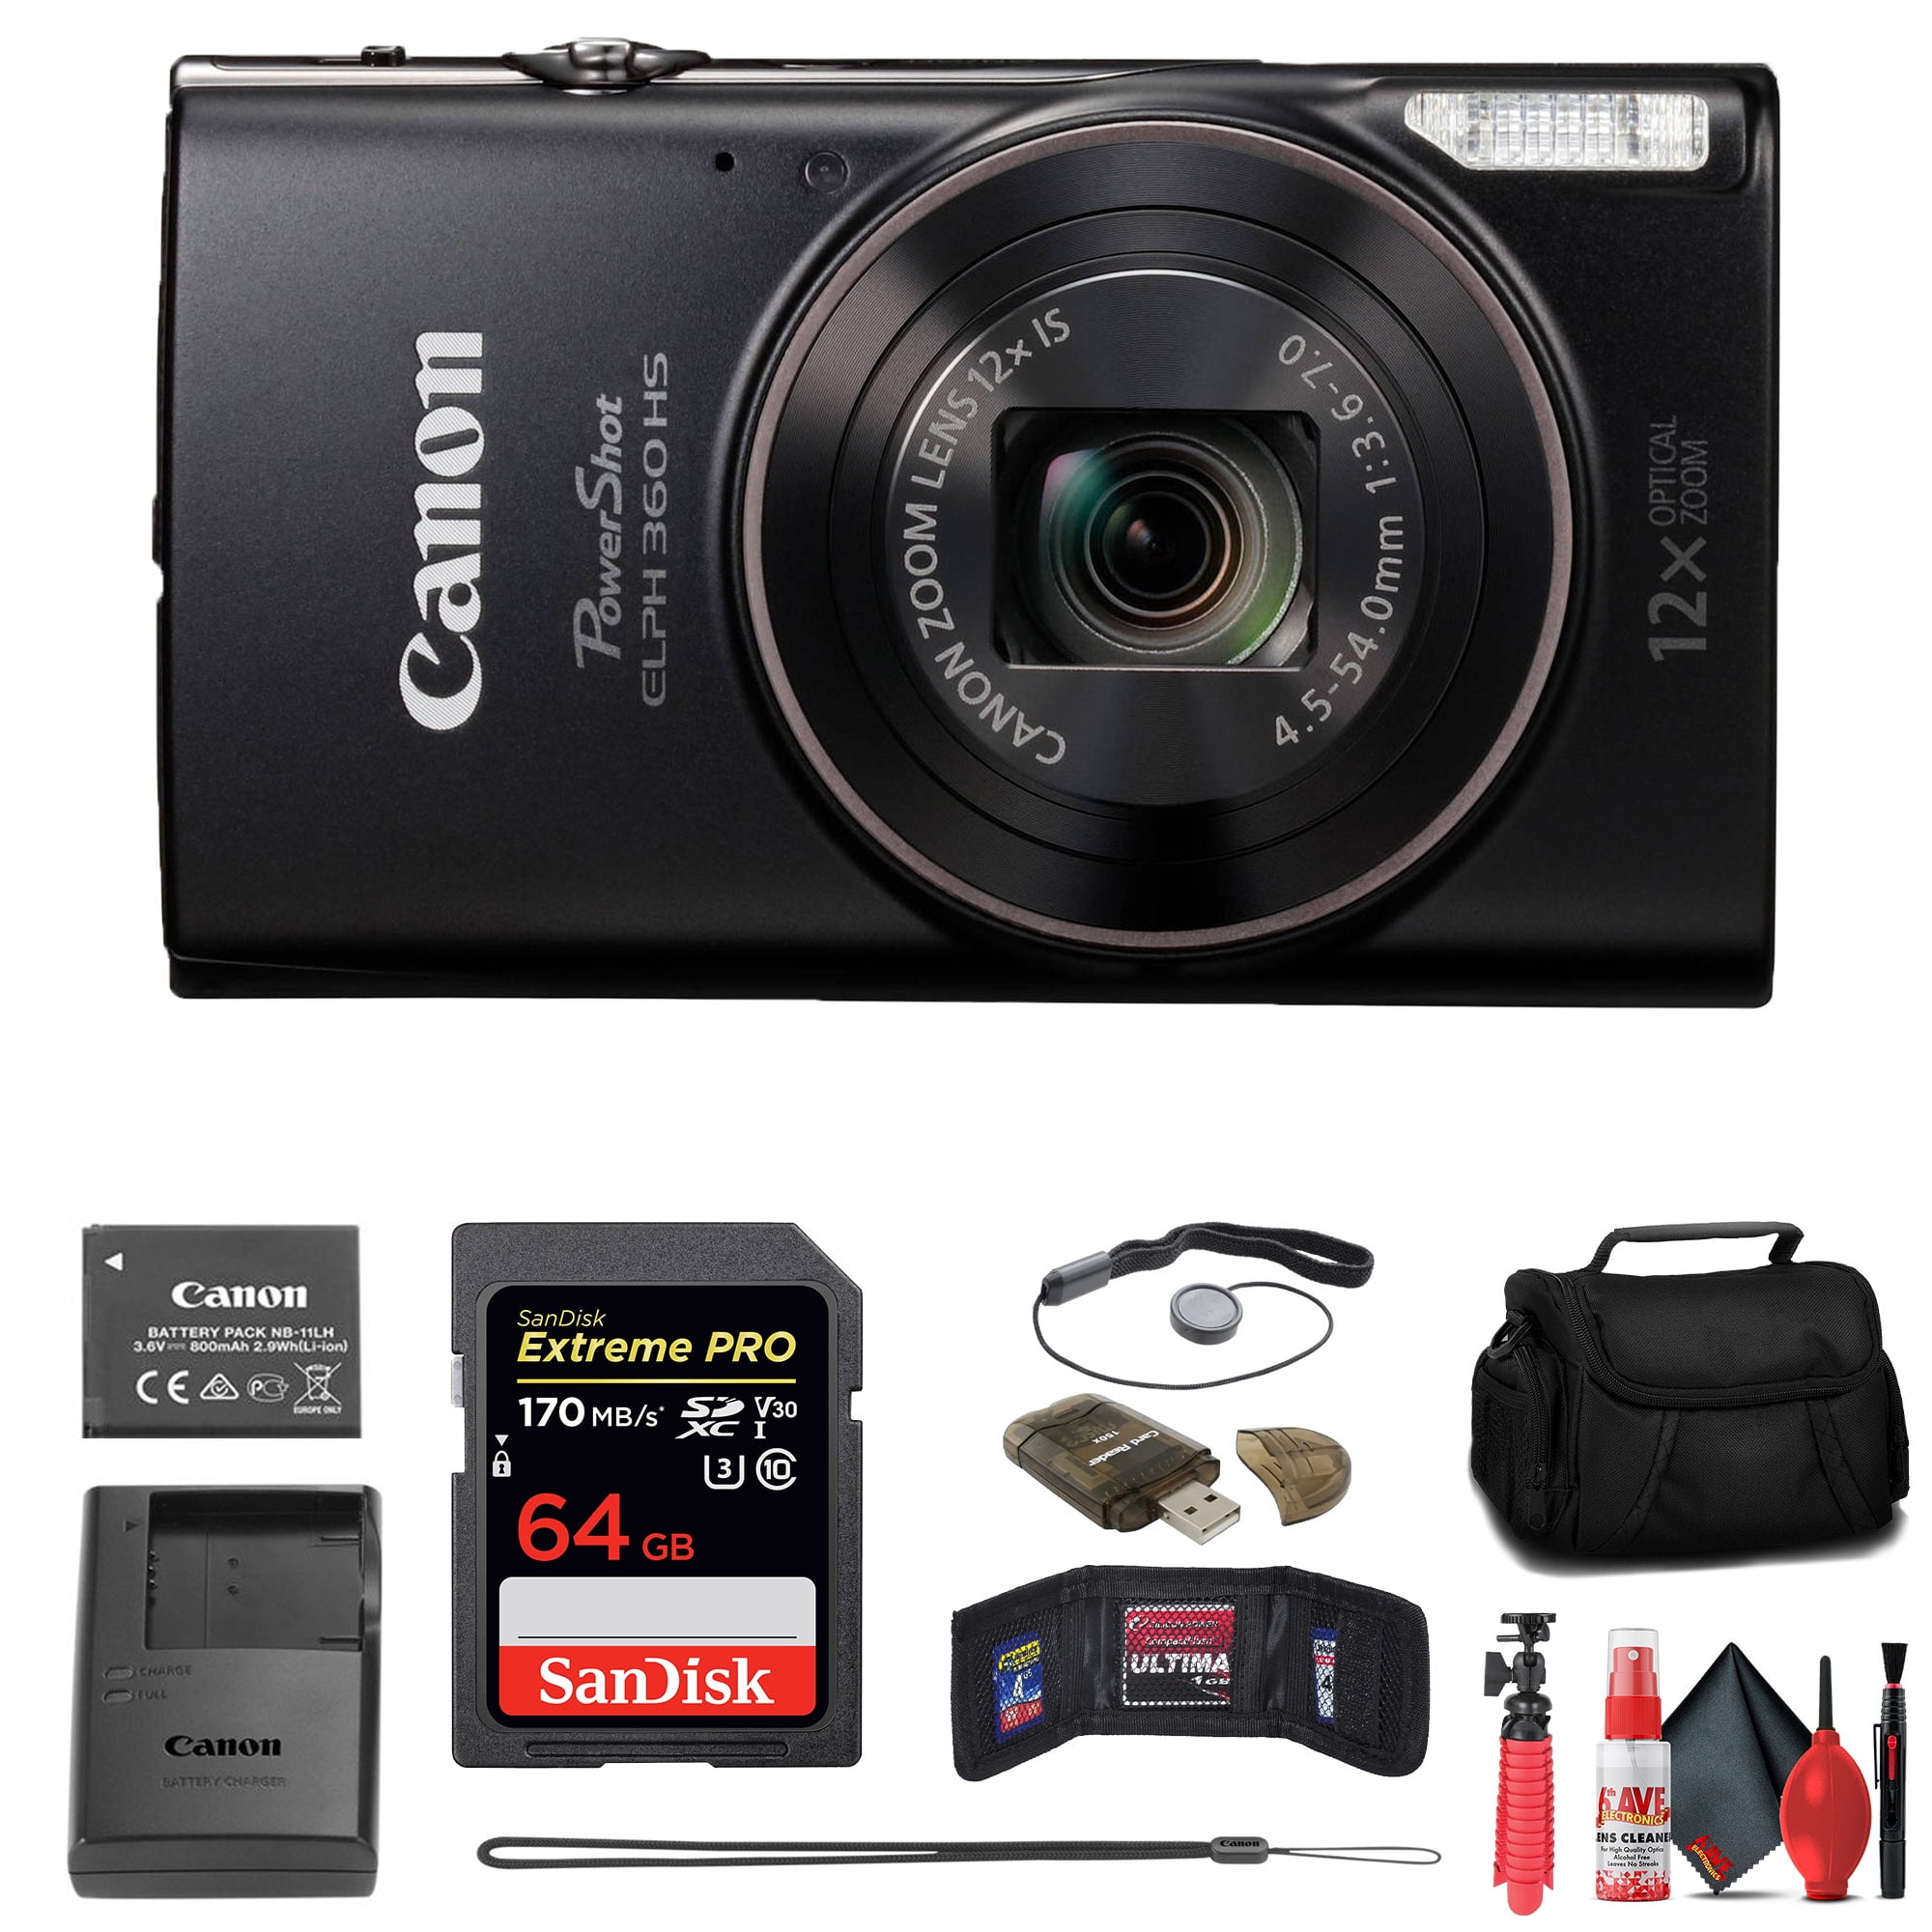 Canon PowerShot ELPH 360 HS Digital Camera (Black) (1075C001) +